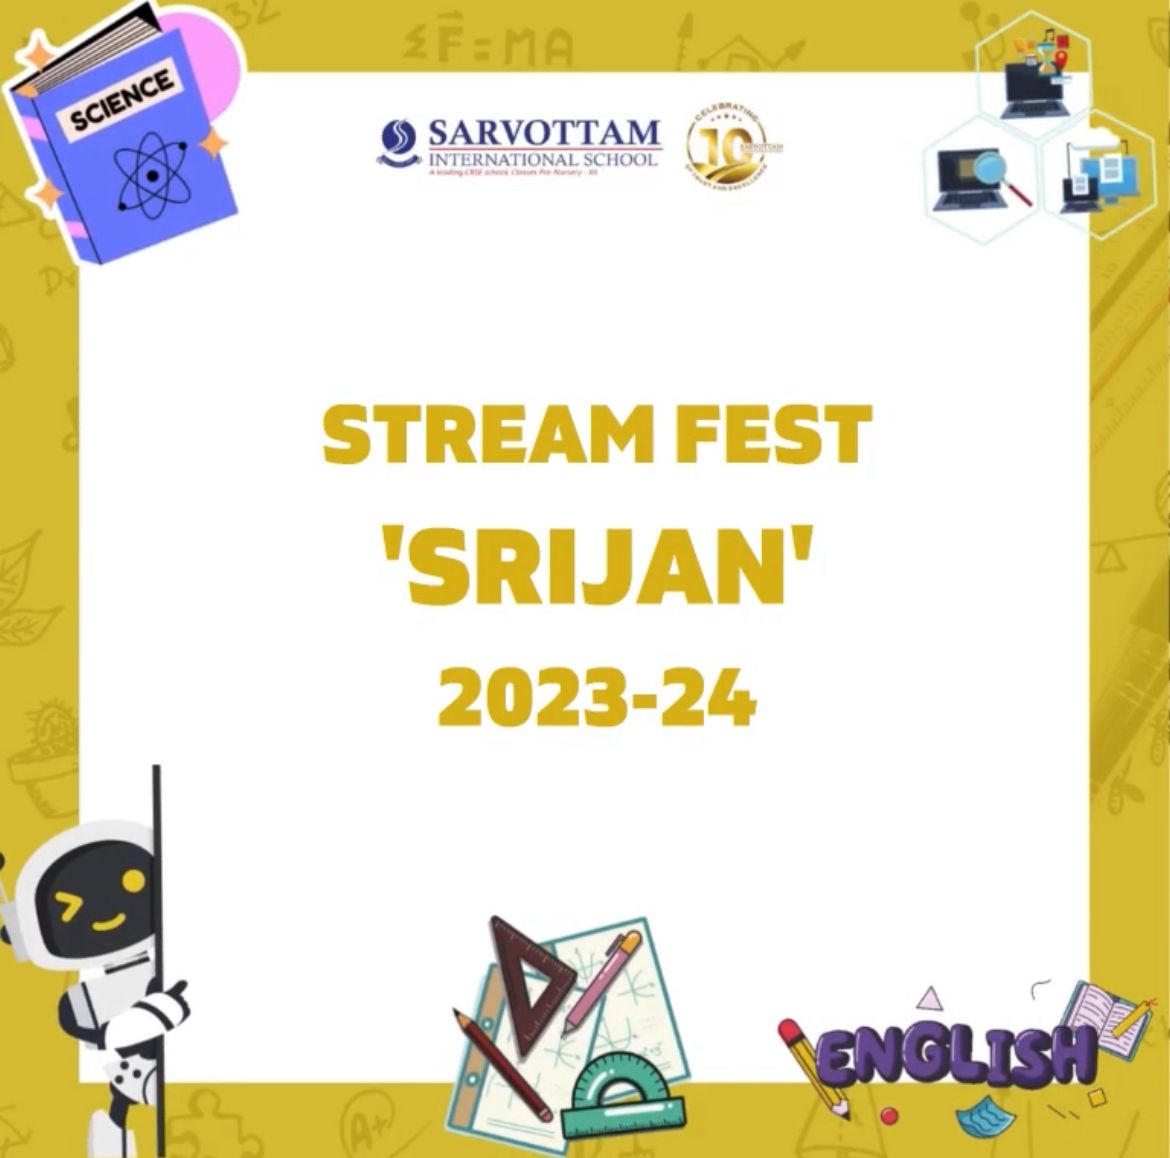 Srijan - Stream Fest